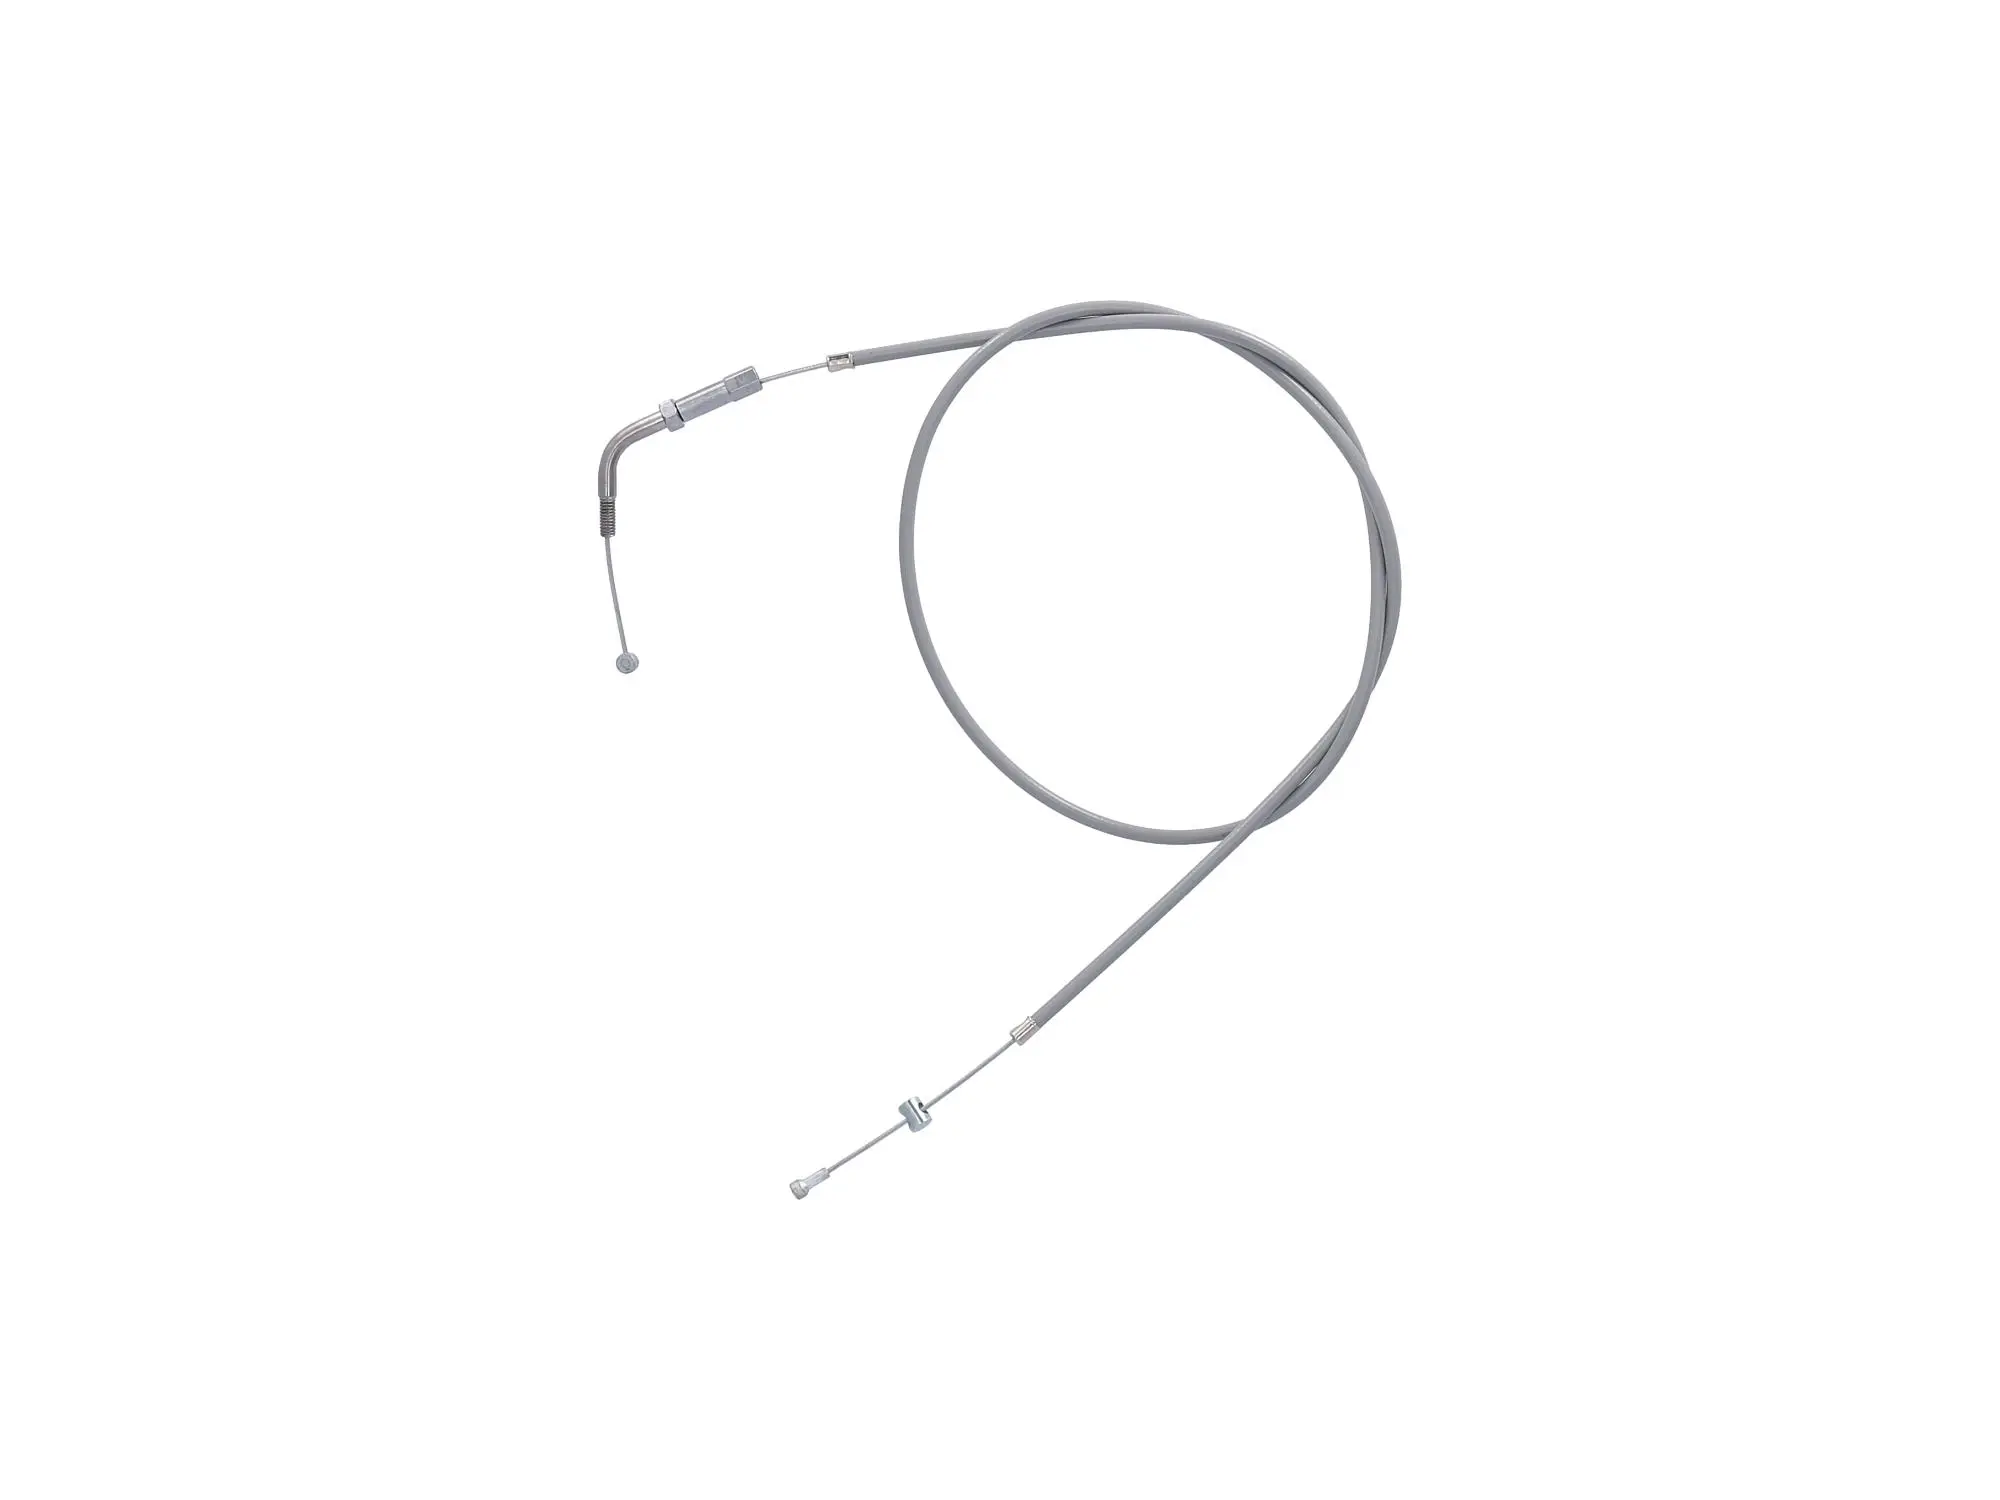 Gearshift cable, gray (engine Sö 4-1 P/K) - Simson SR4-1 Spatz, KR50, Item no: 10068700 - Image 1